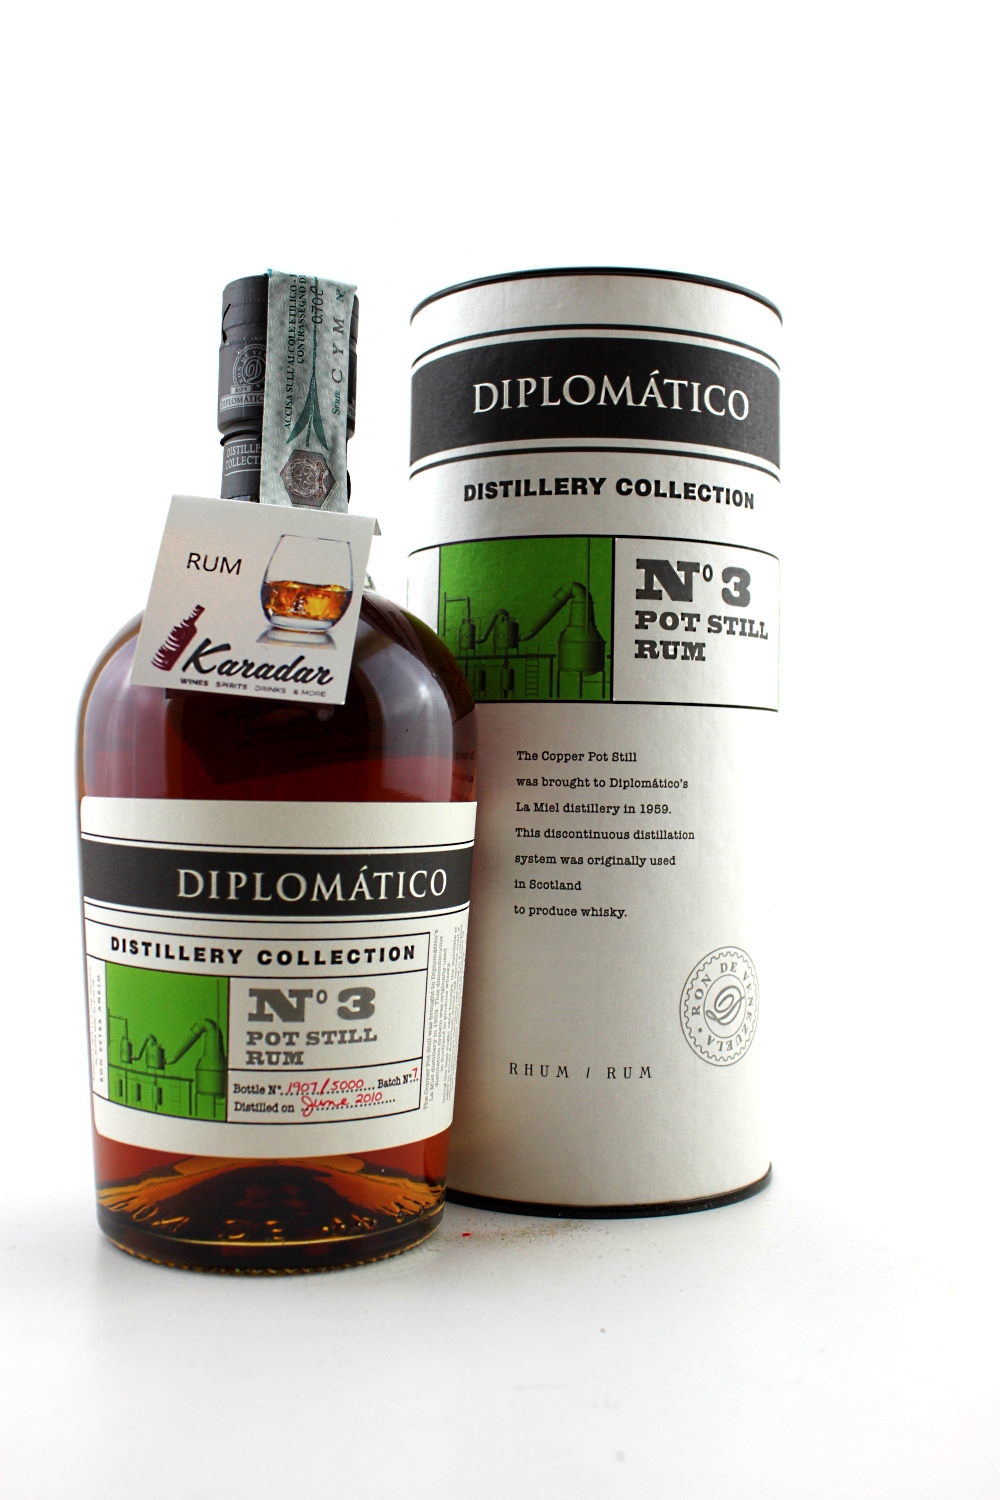 N.3 vol. Diplomatico 47% Still Collection Rum Rum Pot Distillery